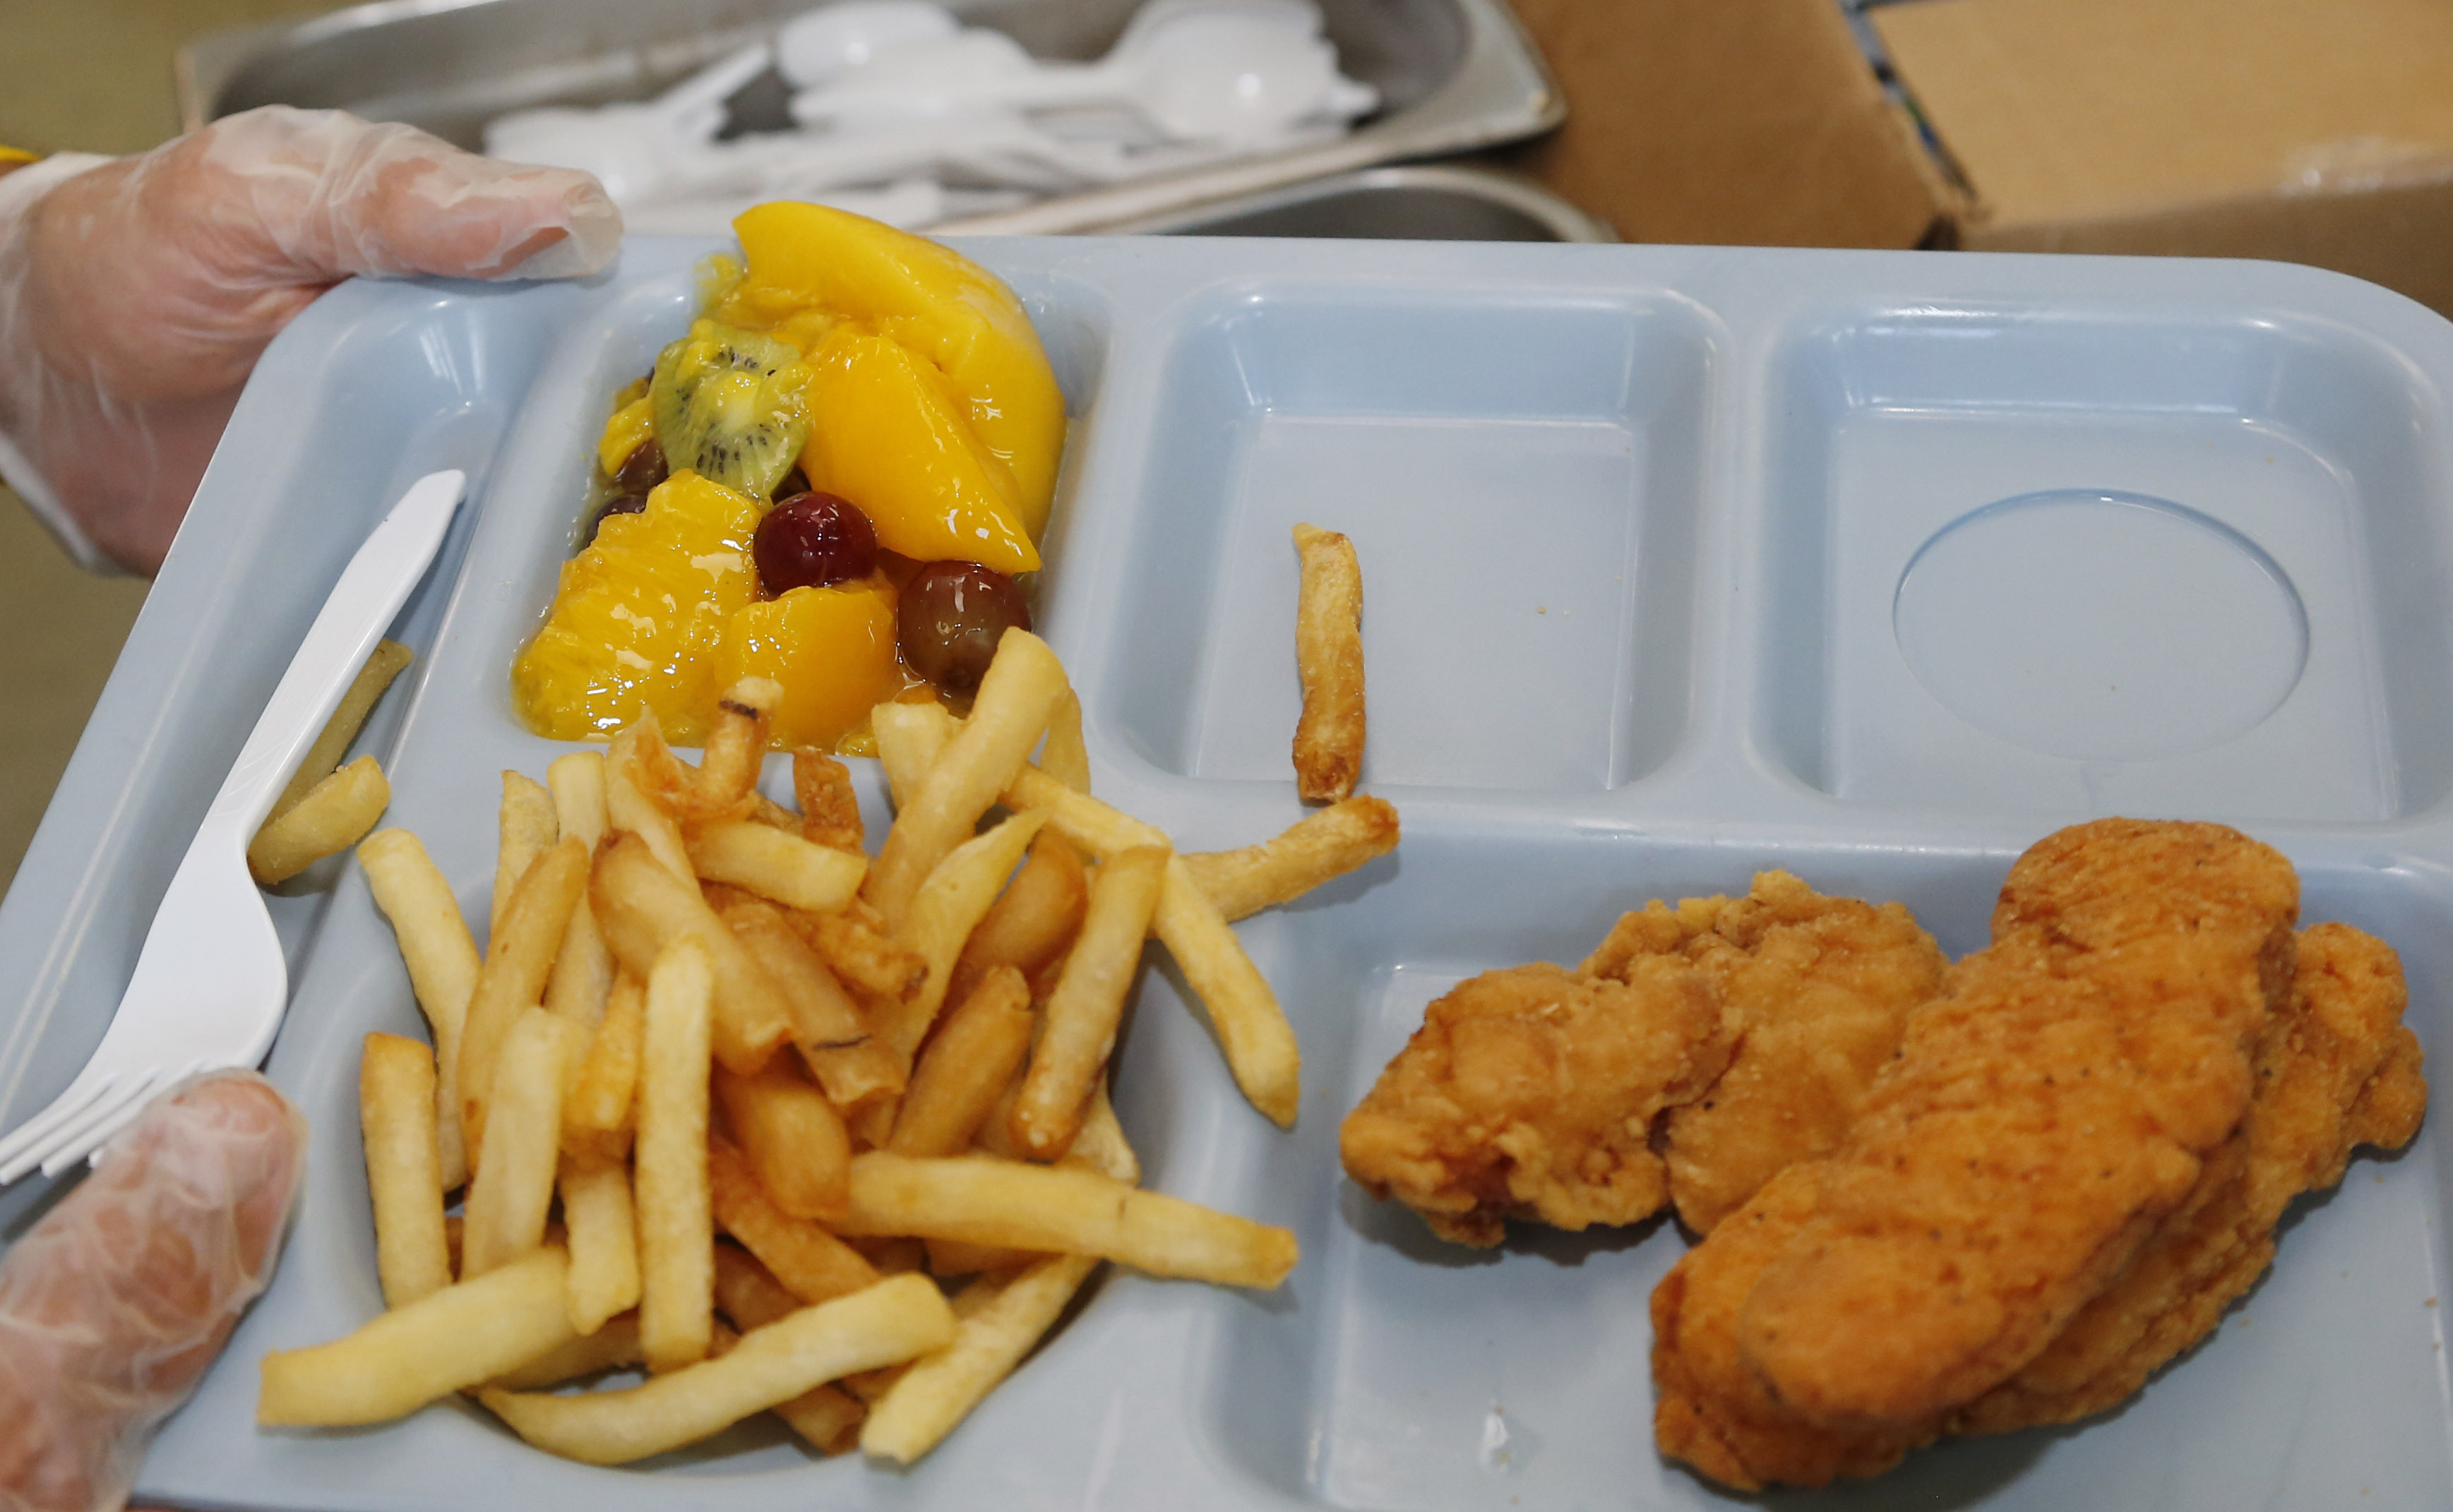 Restaurants lack healthy food options for kids, Va. study finds